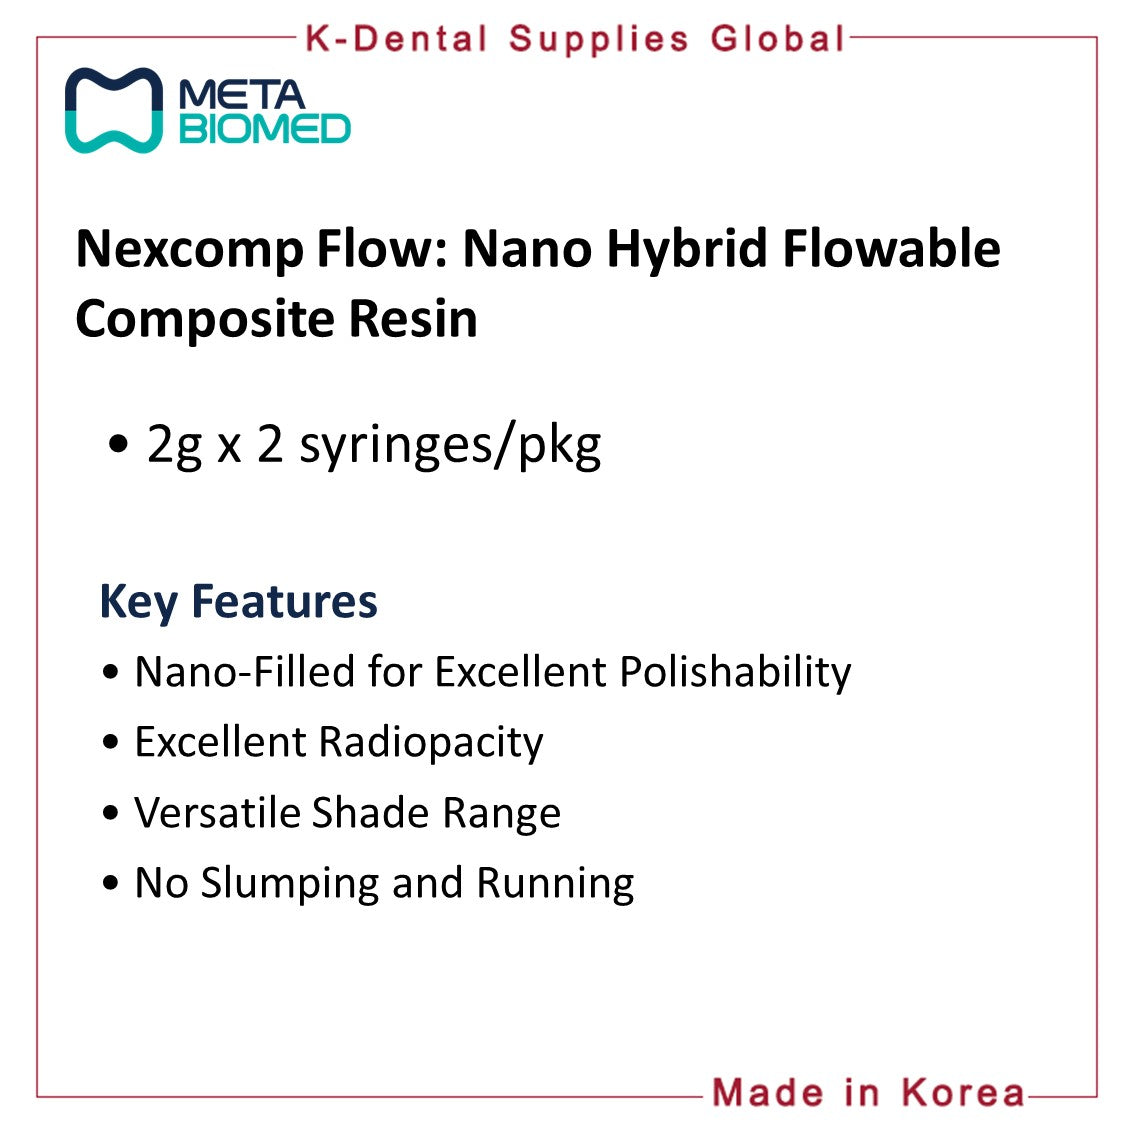 Nexcomp Flow Nano Hybrid Flowable Composite Resin 2g x 2 syringes